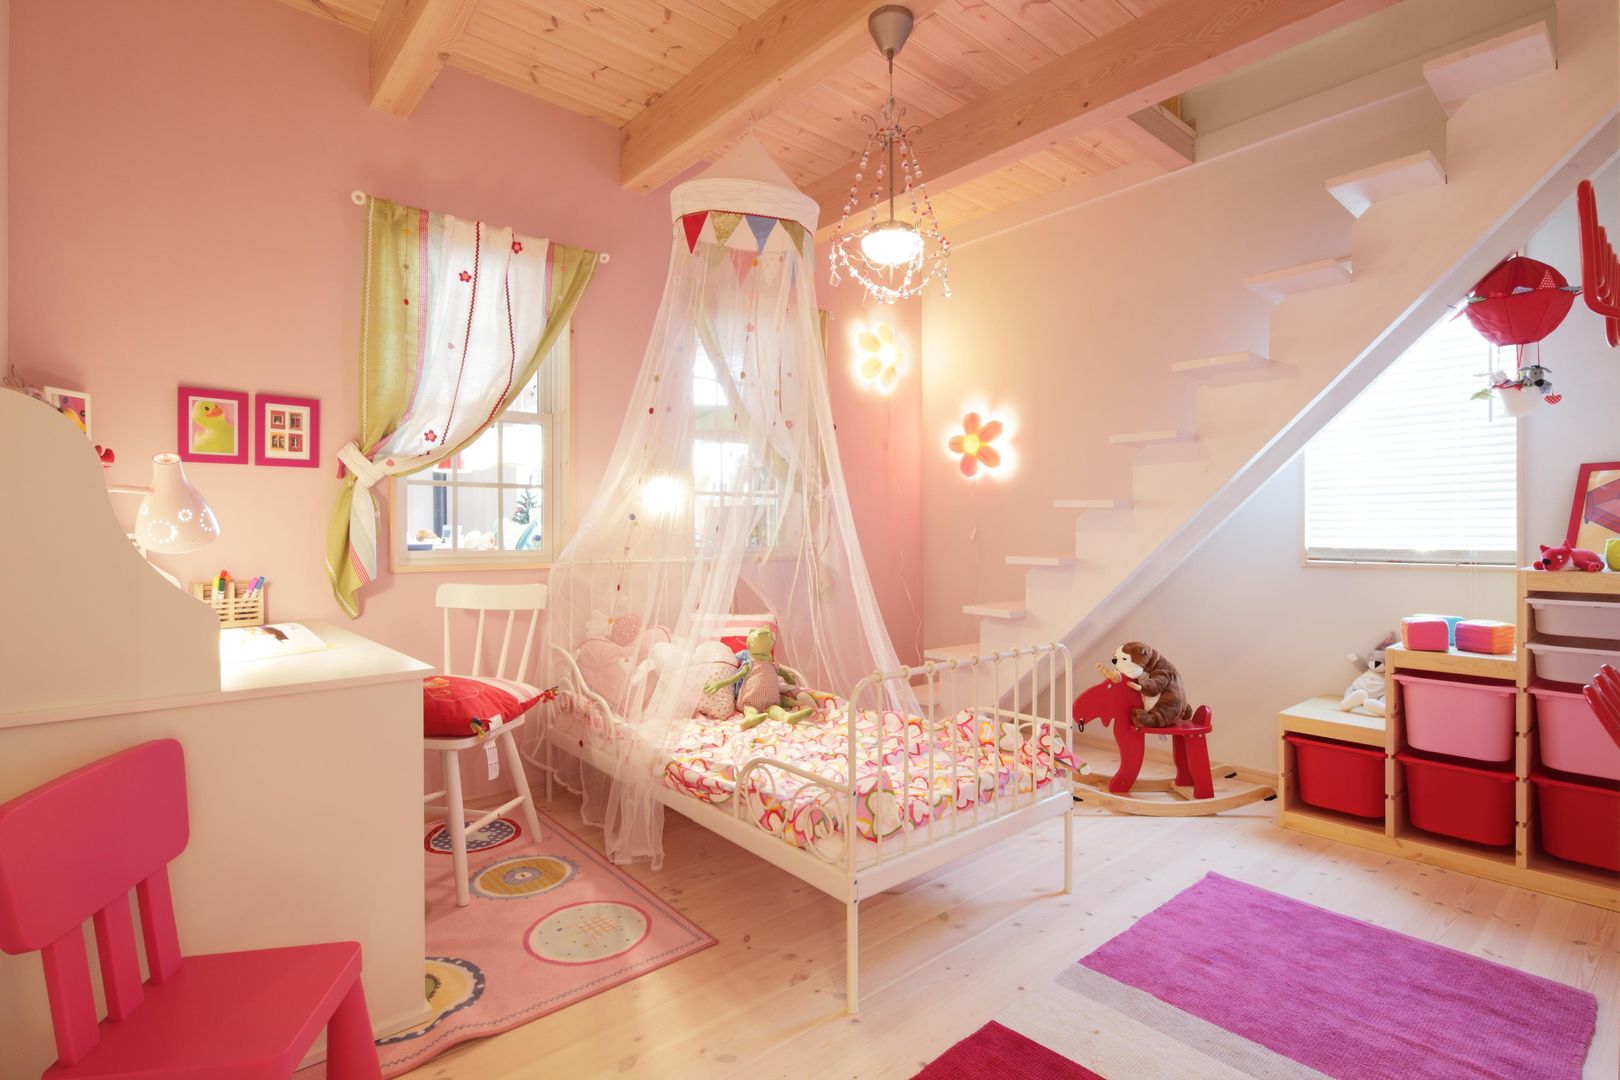 D`s HOUSE, dwarf dwarf Nursery/kid’s room